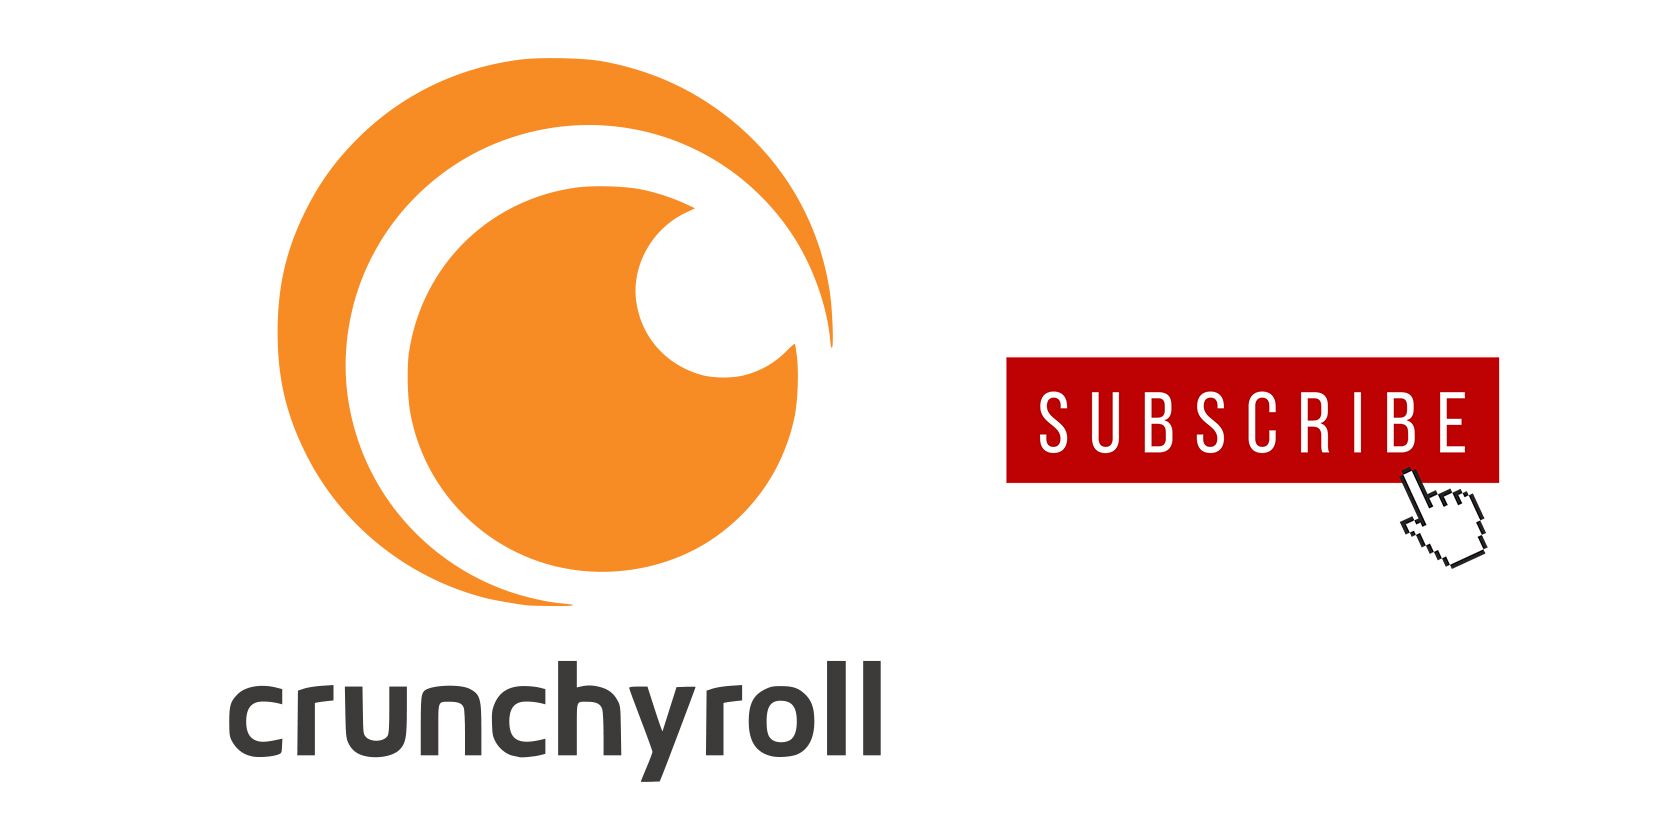 Is crunchyroll worth buying? - Quora